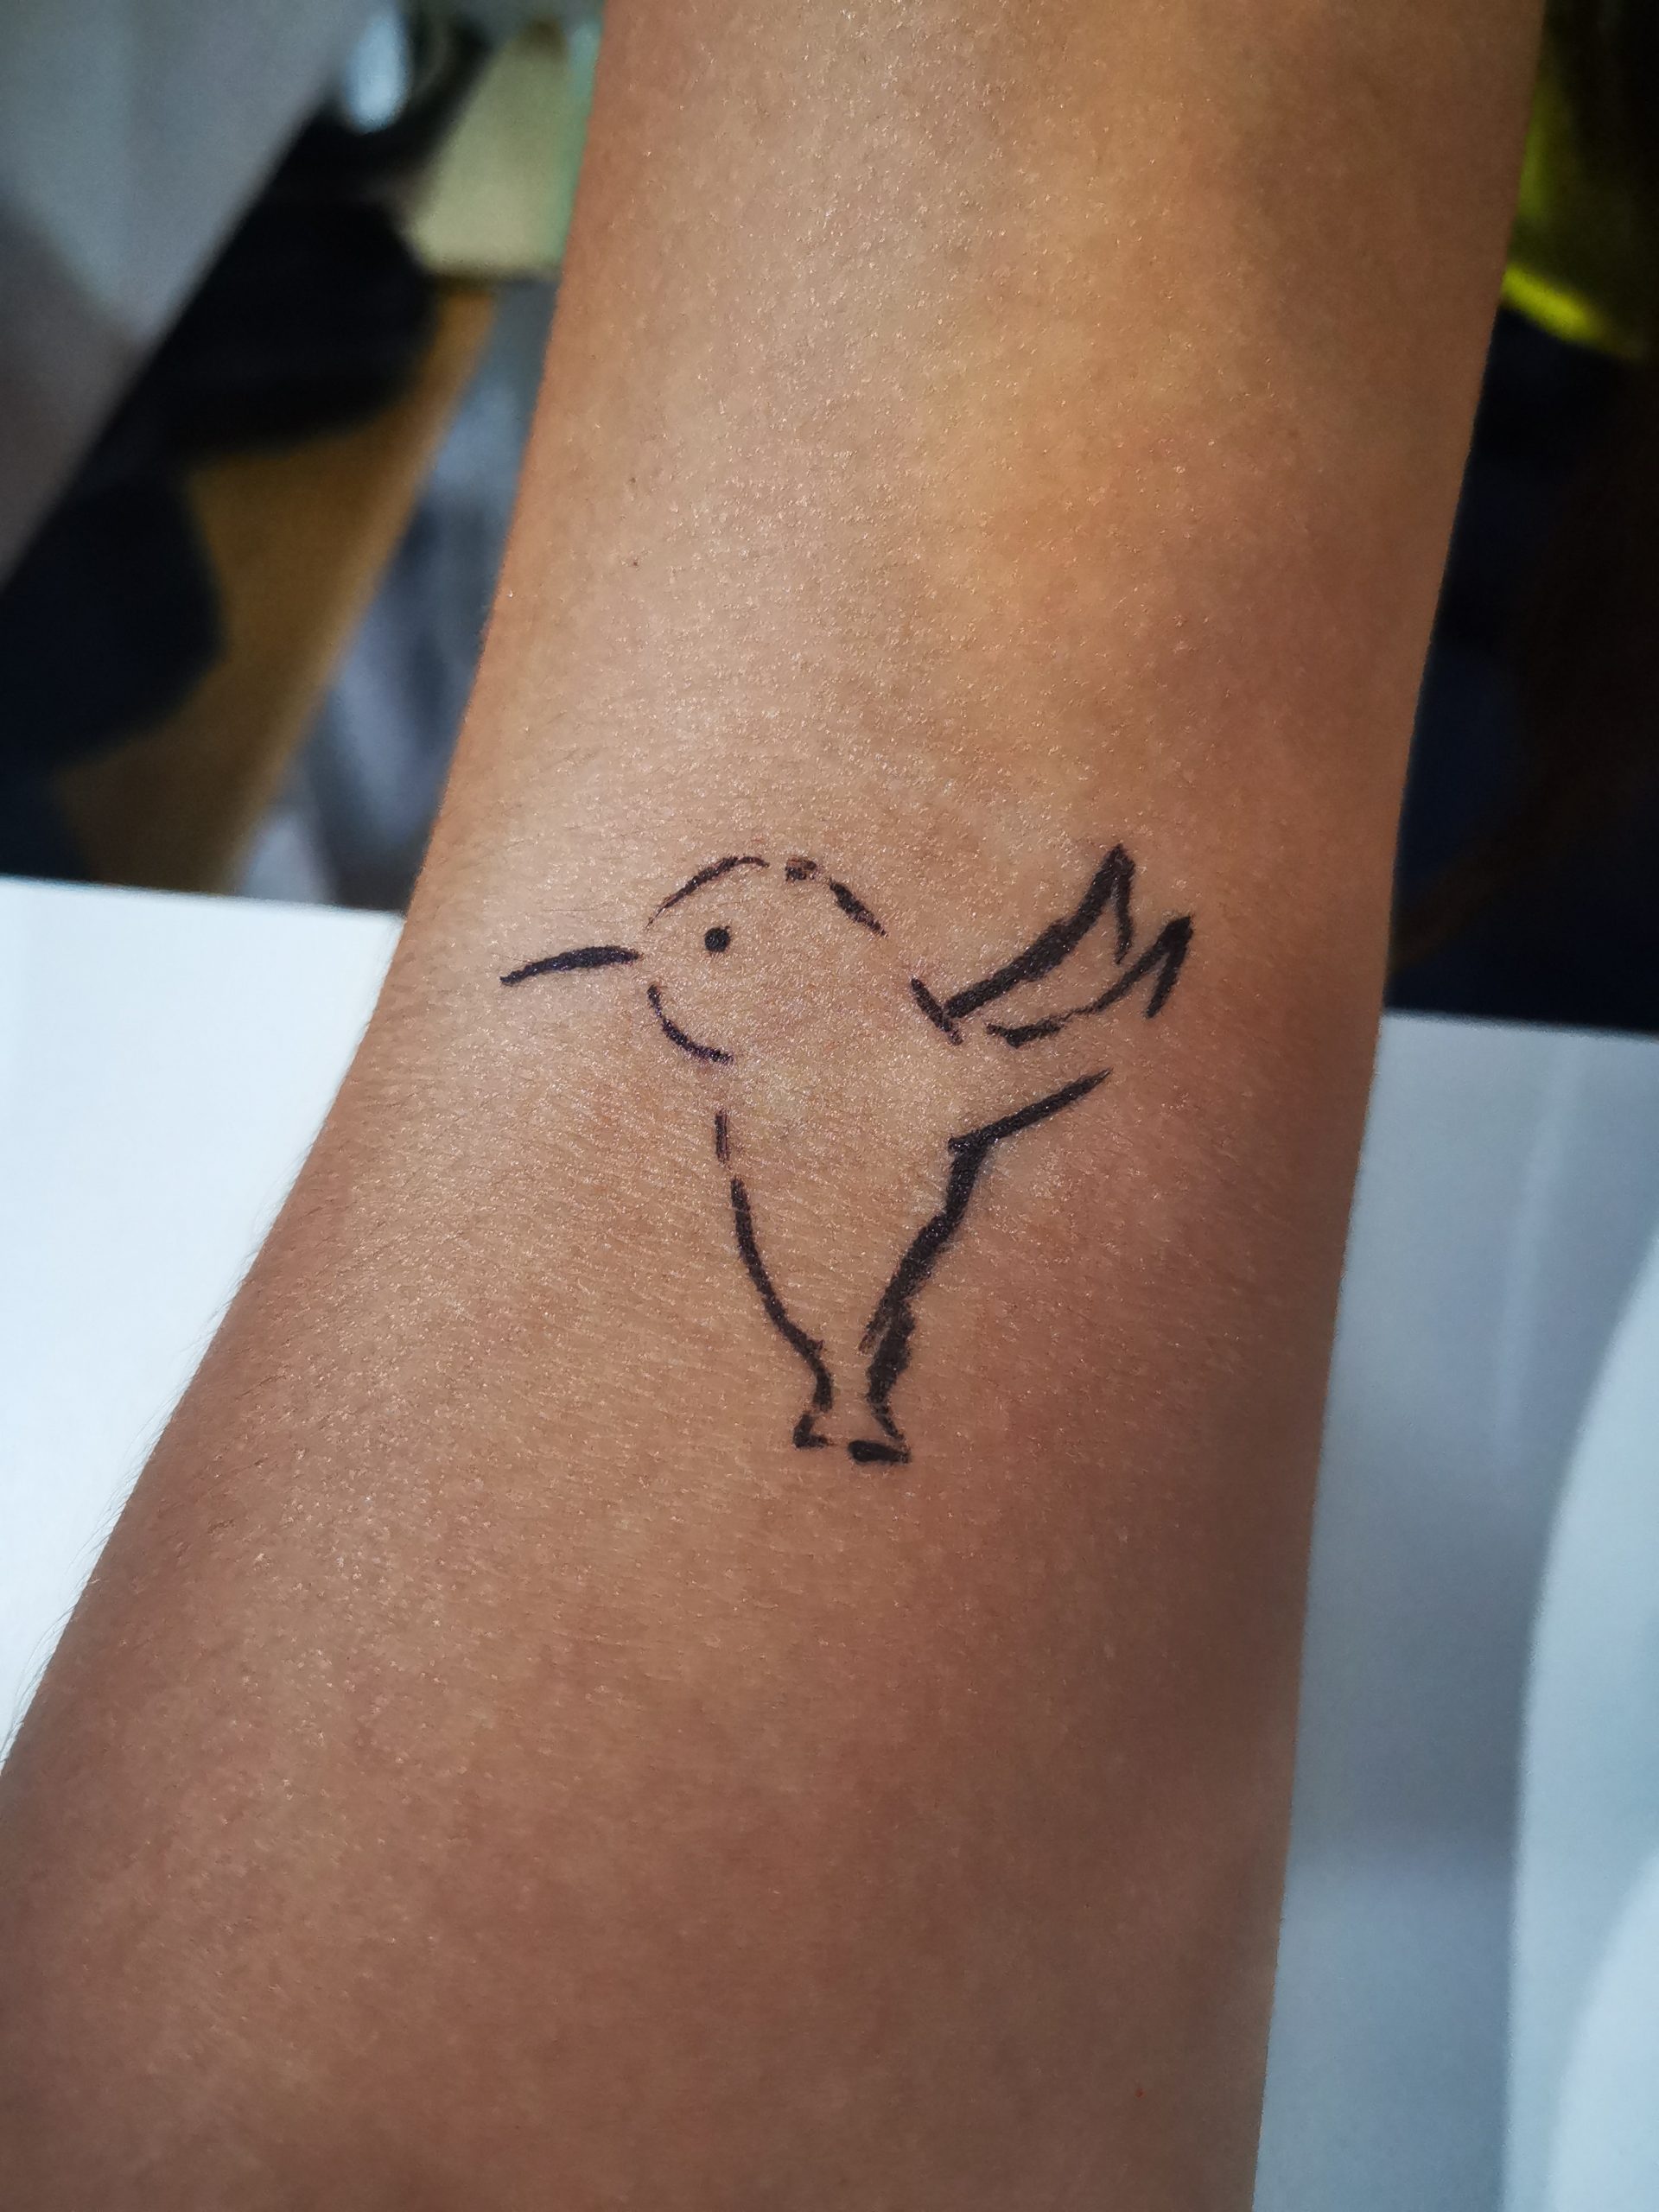 Tattoo of a bird